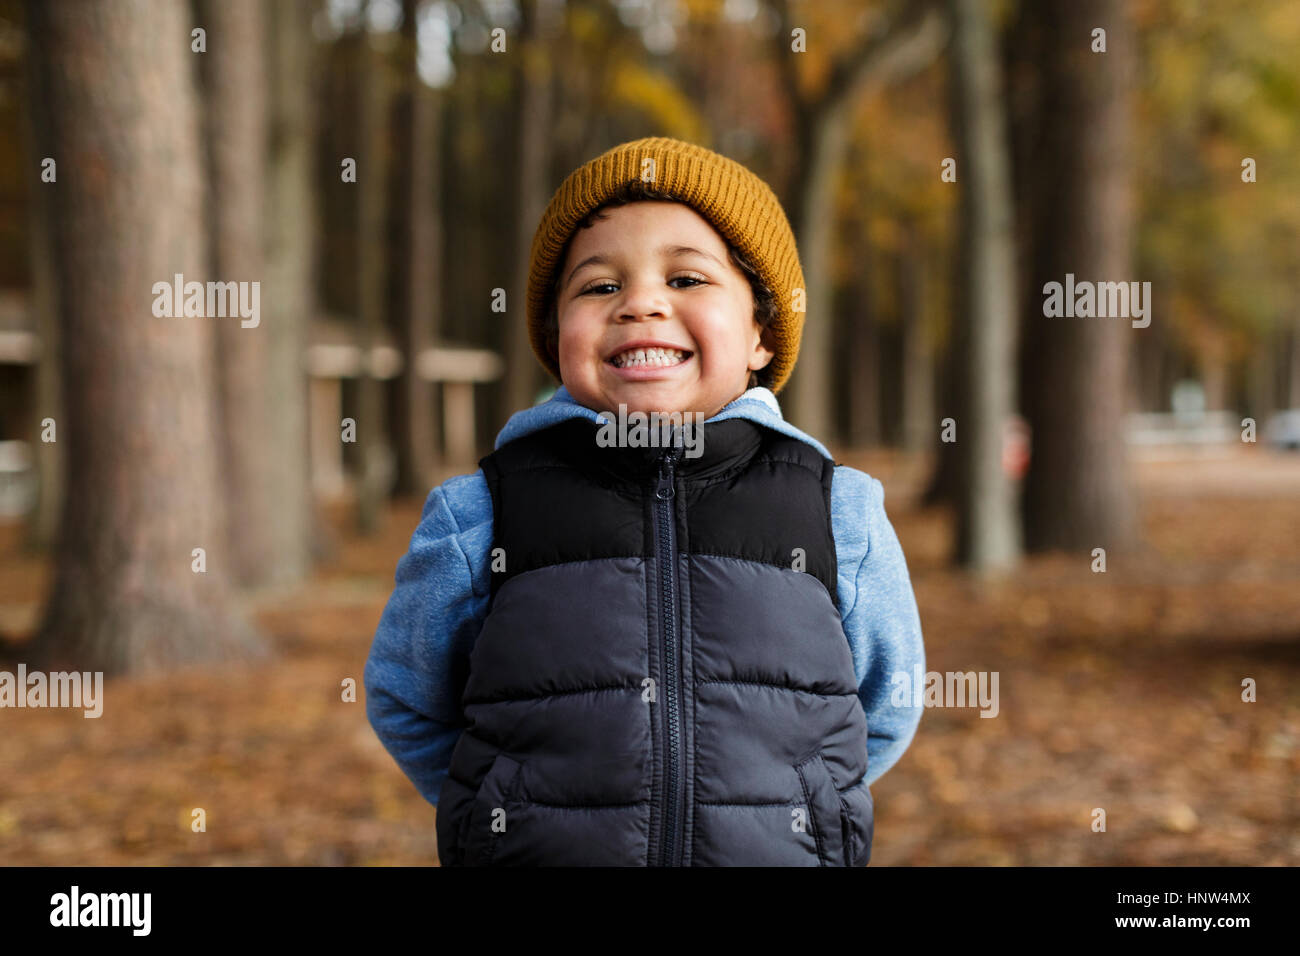 Portrait of smiling Mixed Race boy in park Banque D'Images